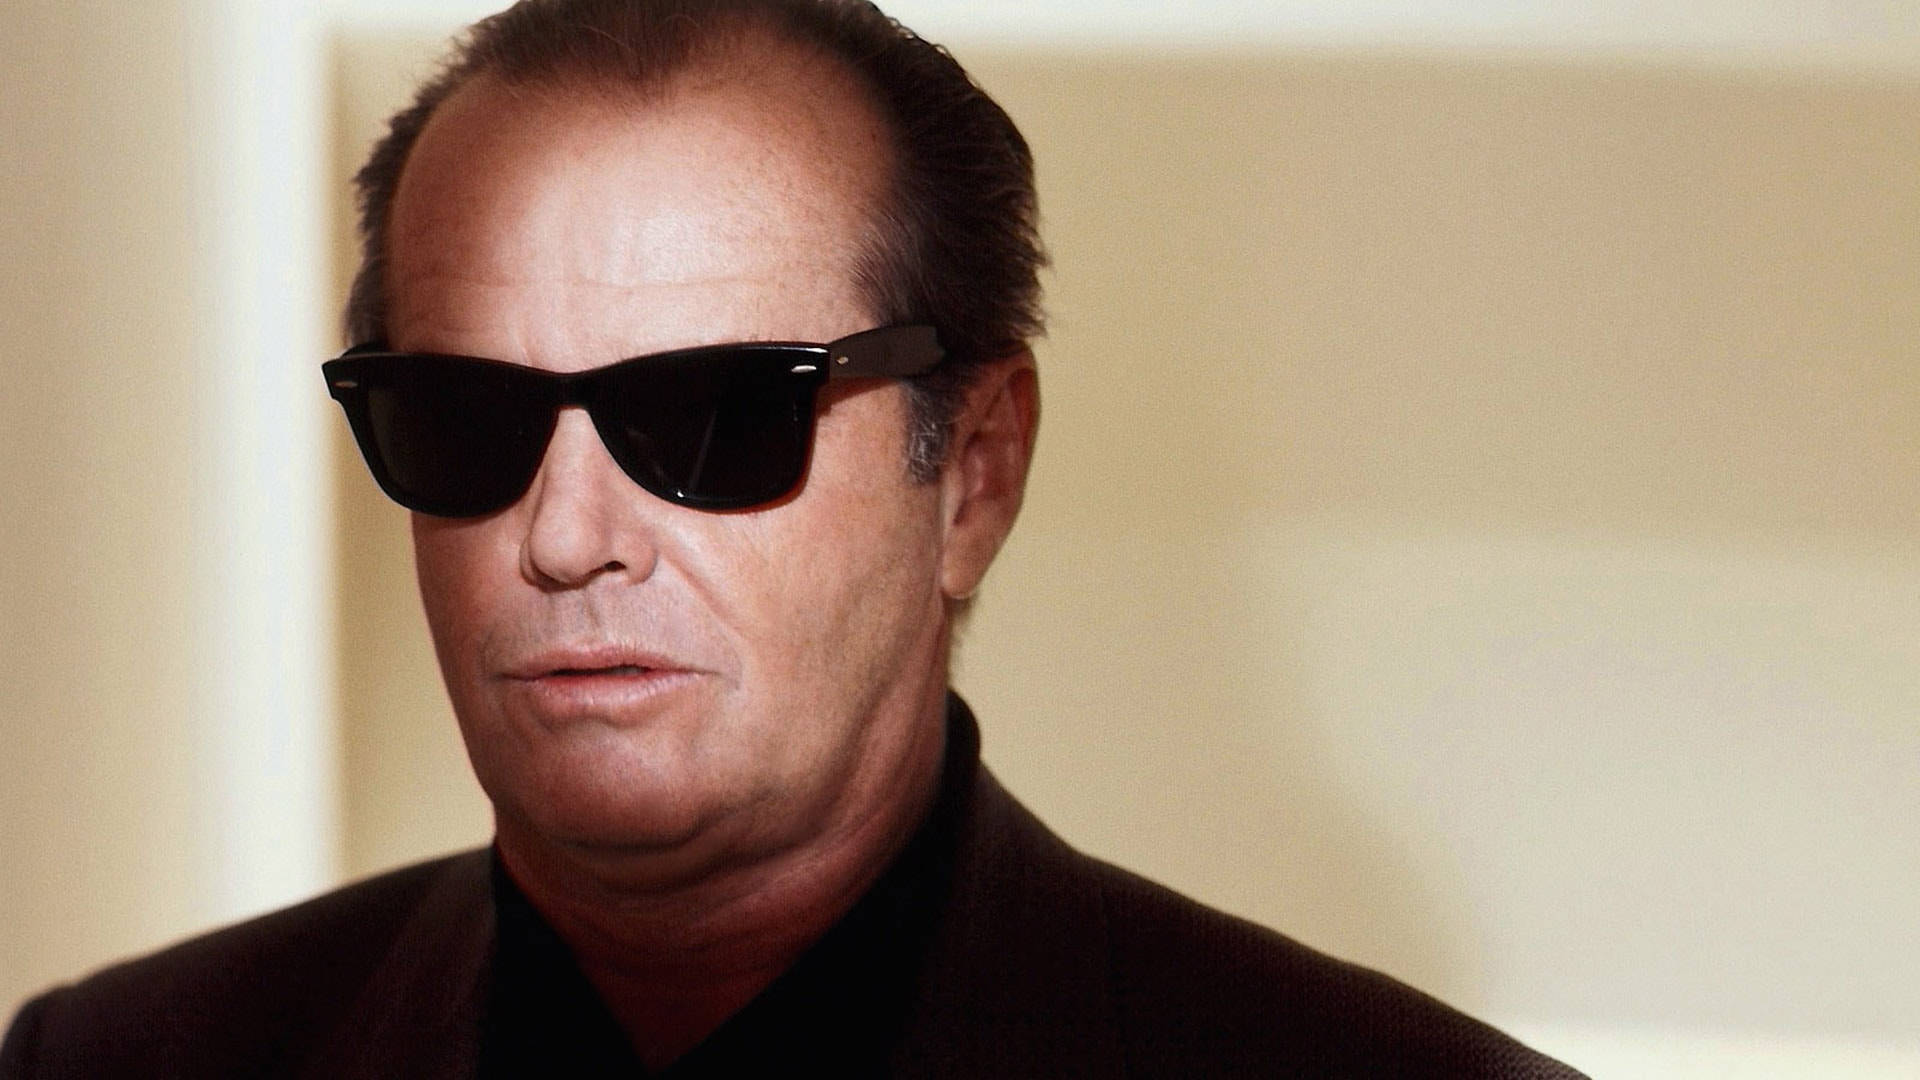 Jack Nicholson Sunglasses American Actor Wallpaper